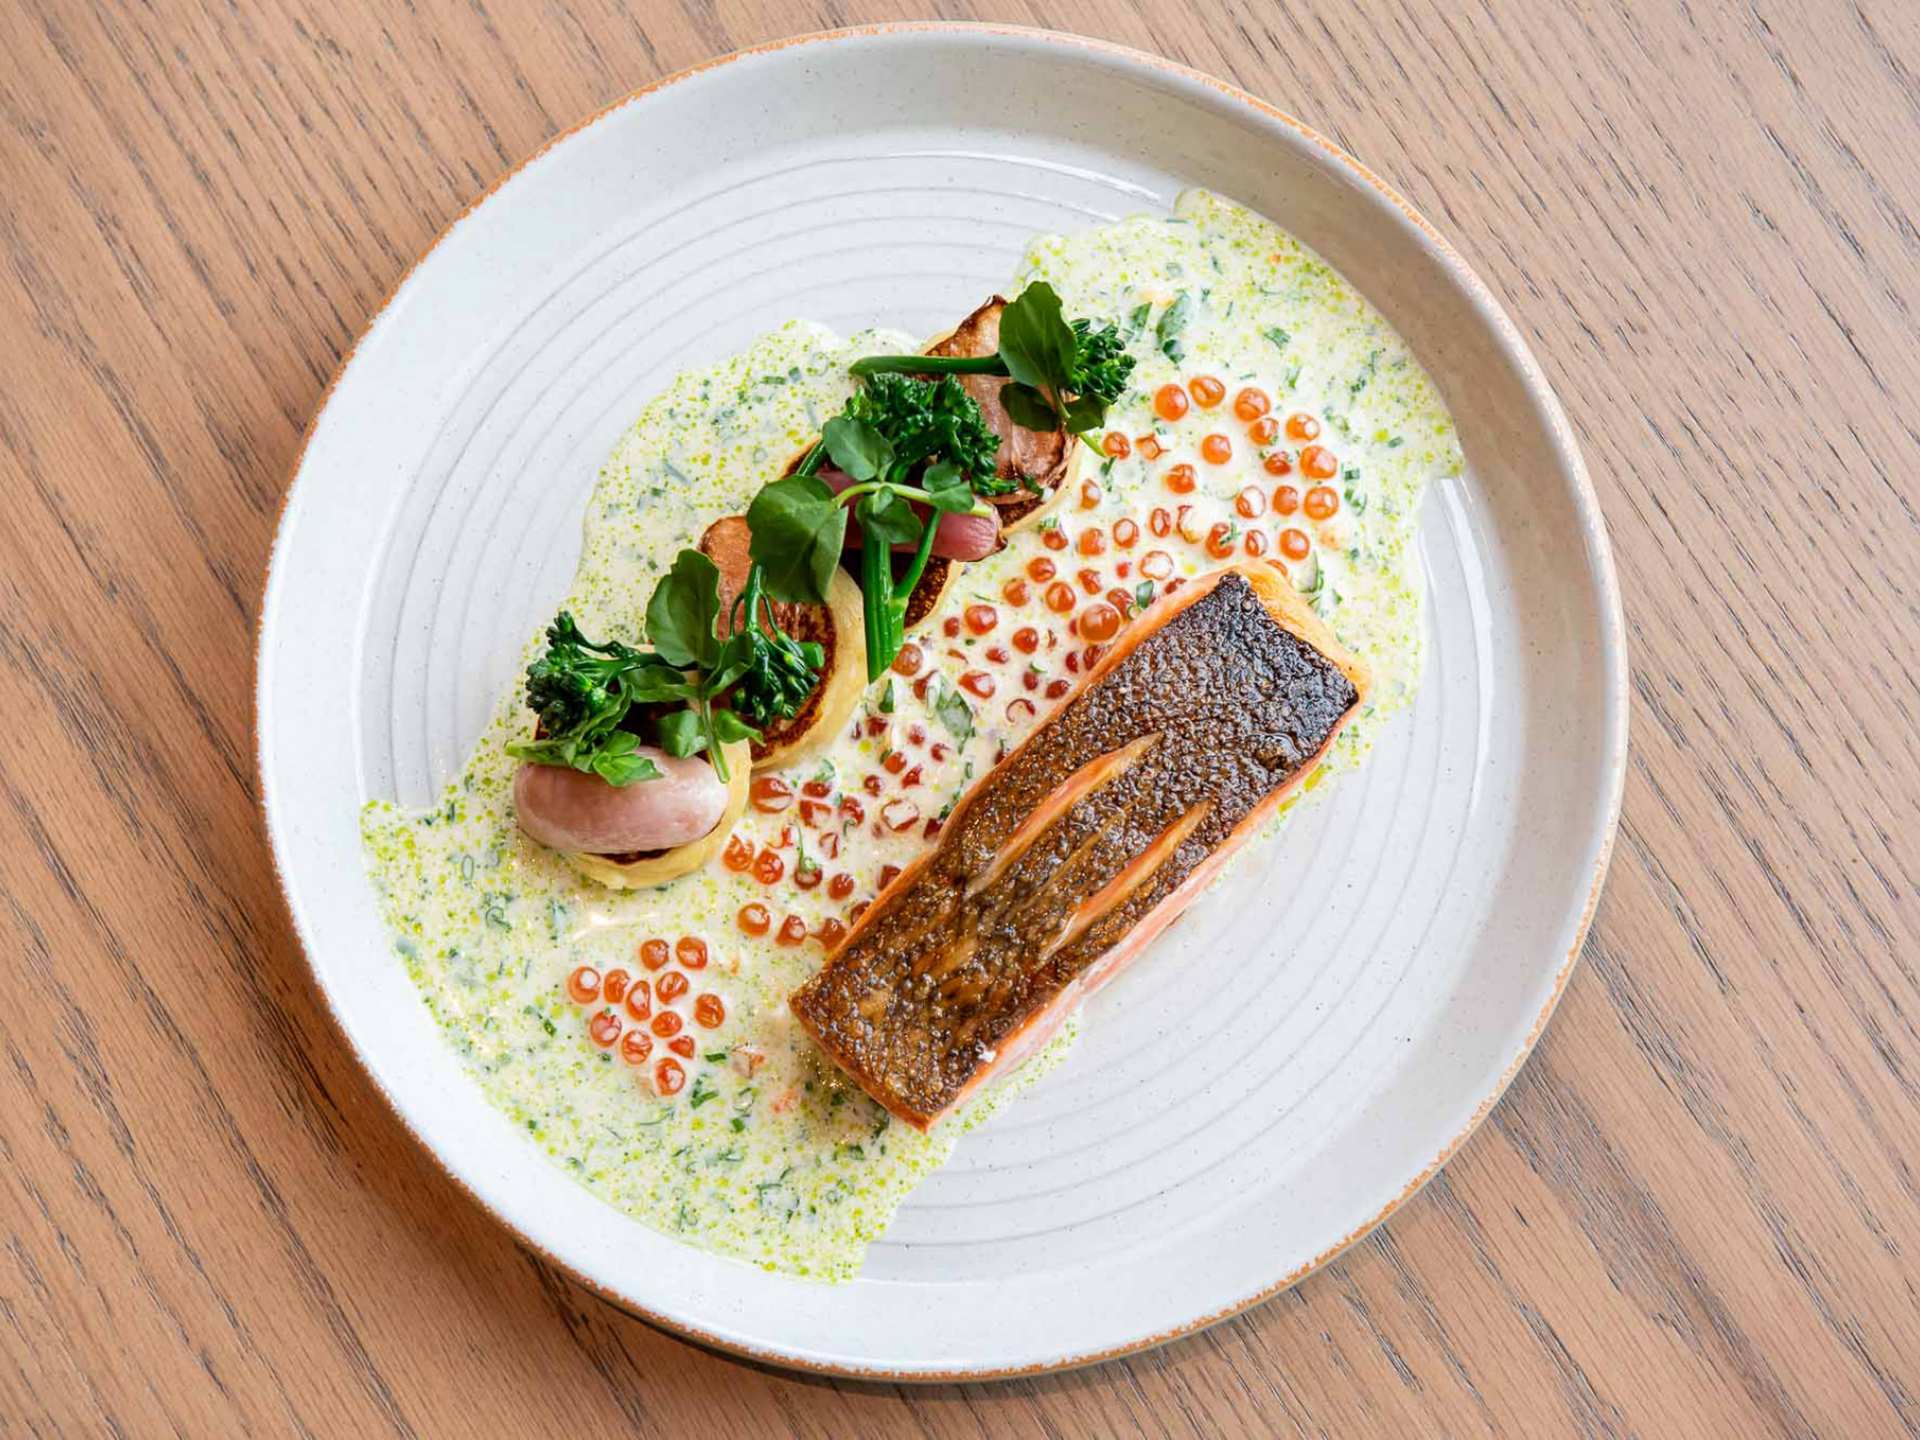 Best new restaurants Toronto | A fish fillet at The Dorset